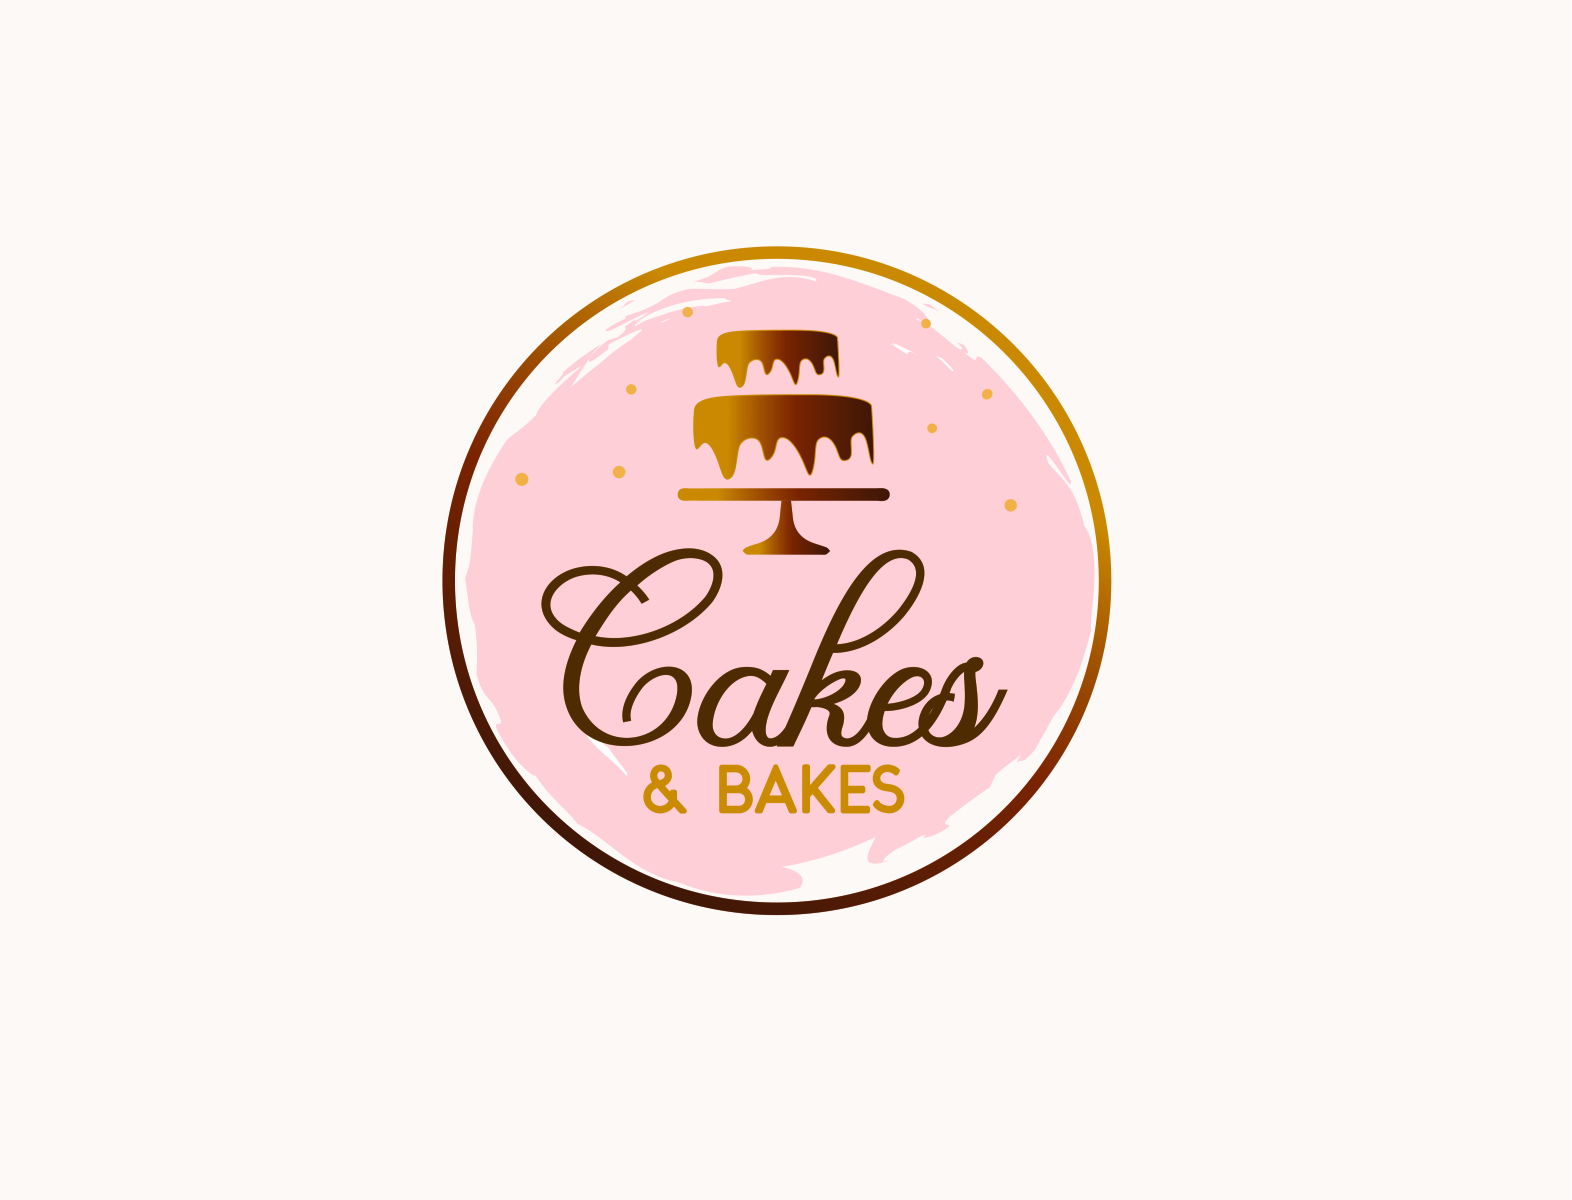 Top 6 Cake Baking Myths Busted - Ferns N Petals